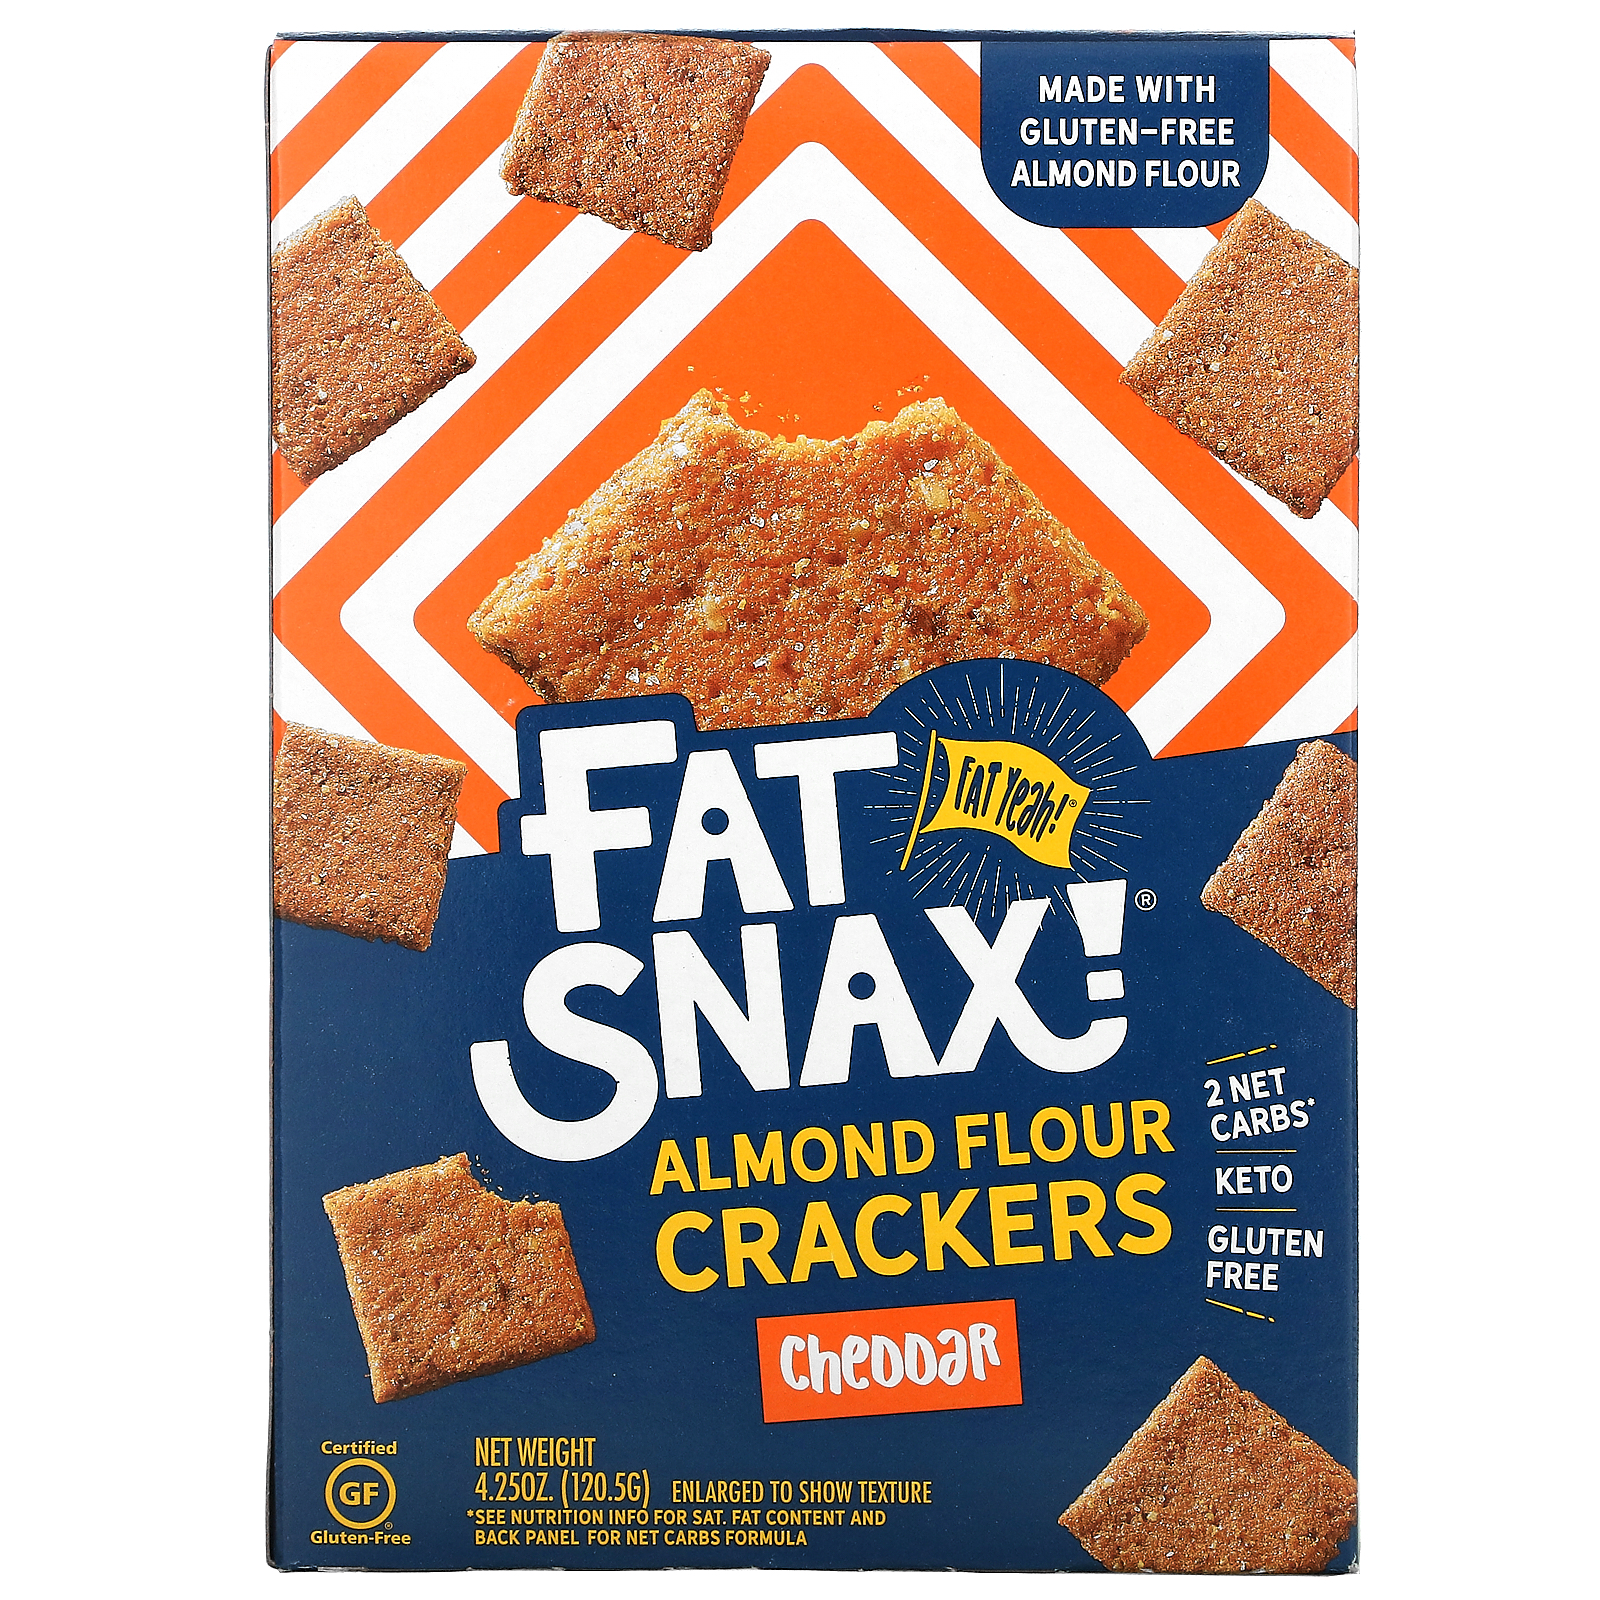 Fat Snax Almond Flour Crackers 卓越 oz 4.25 Cheddar g 2021人気新作 120.5